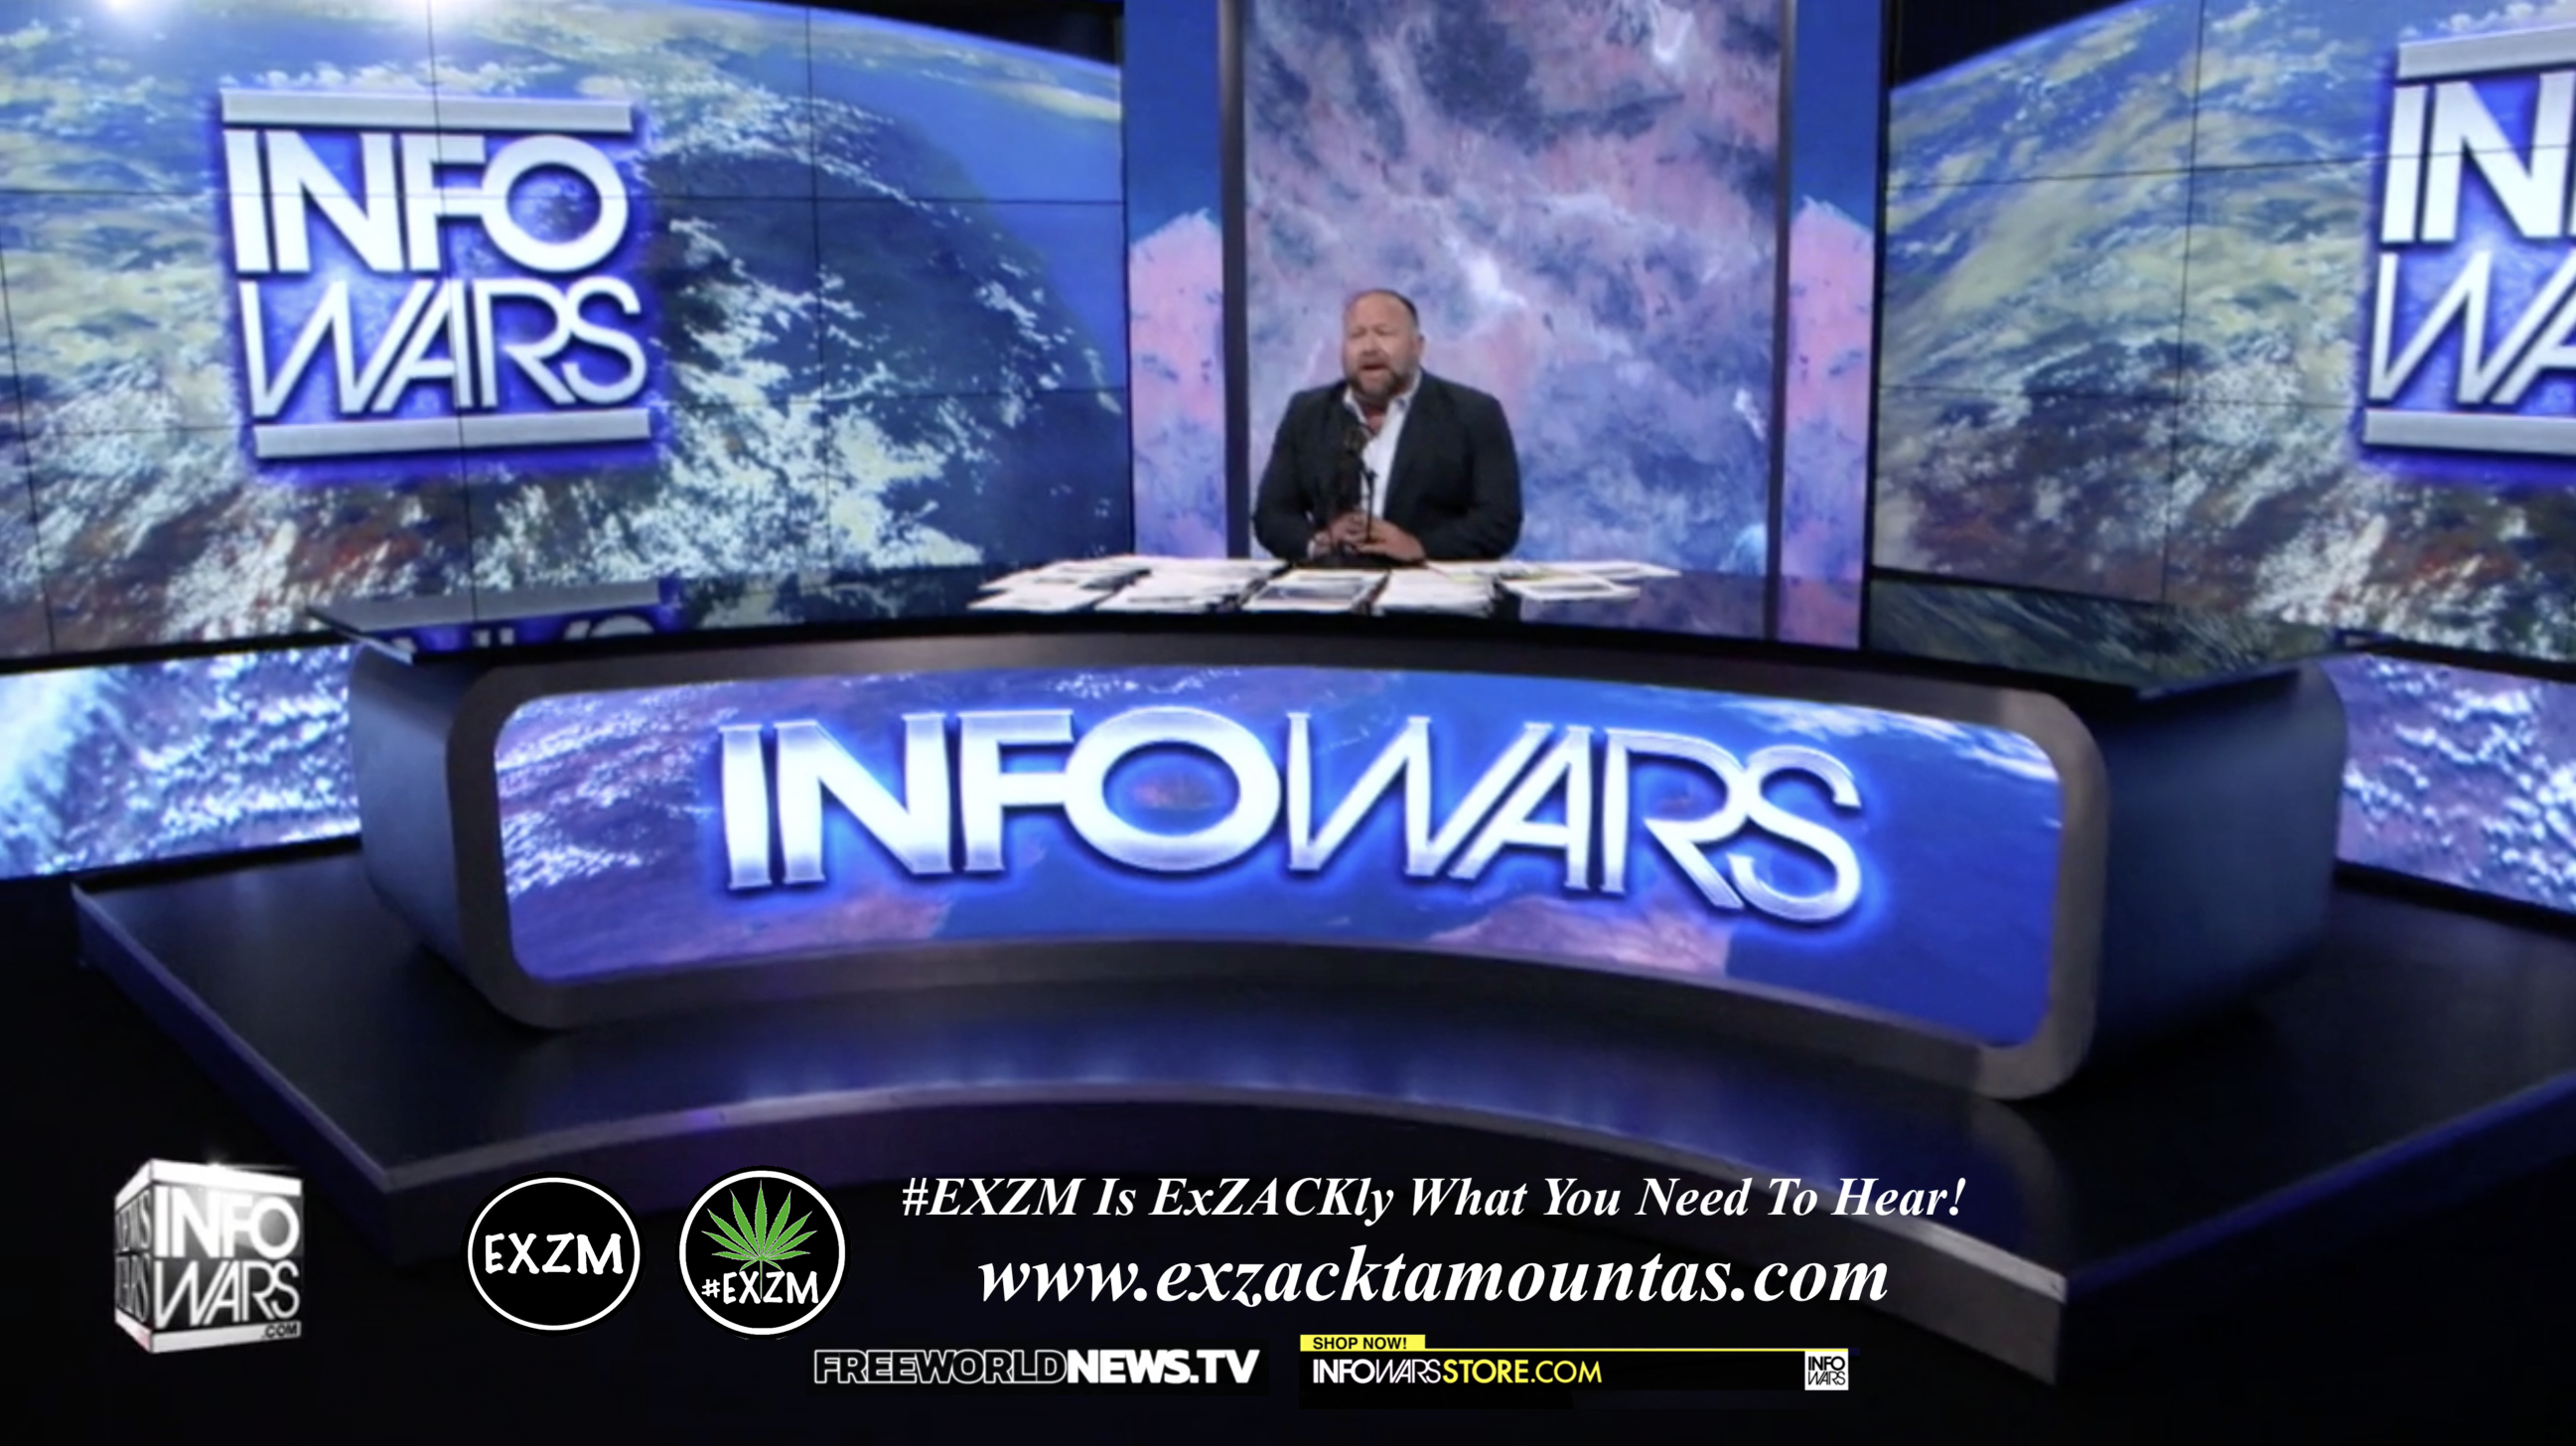 Alex Jones Live In Infowars Studio Free World News TV Earth EXZM Zack Mount June 28th 2021 copy